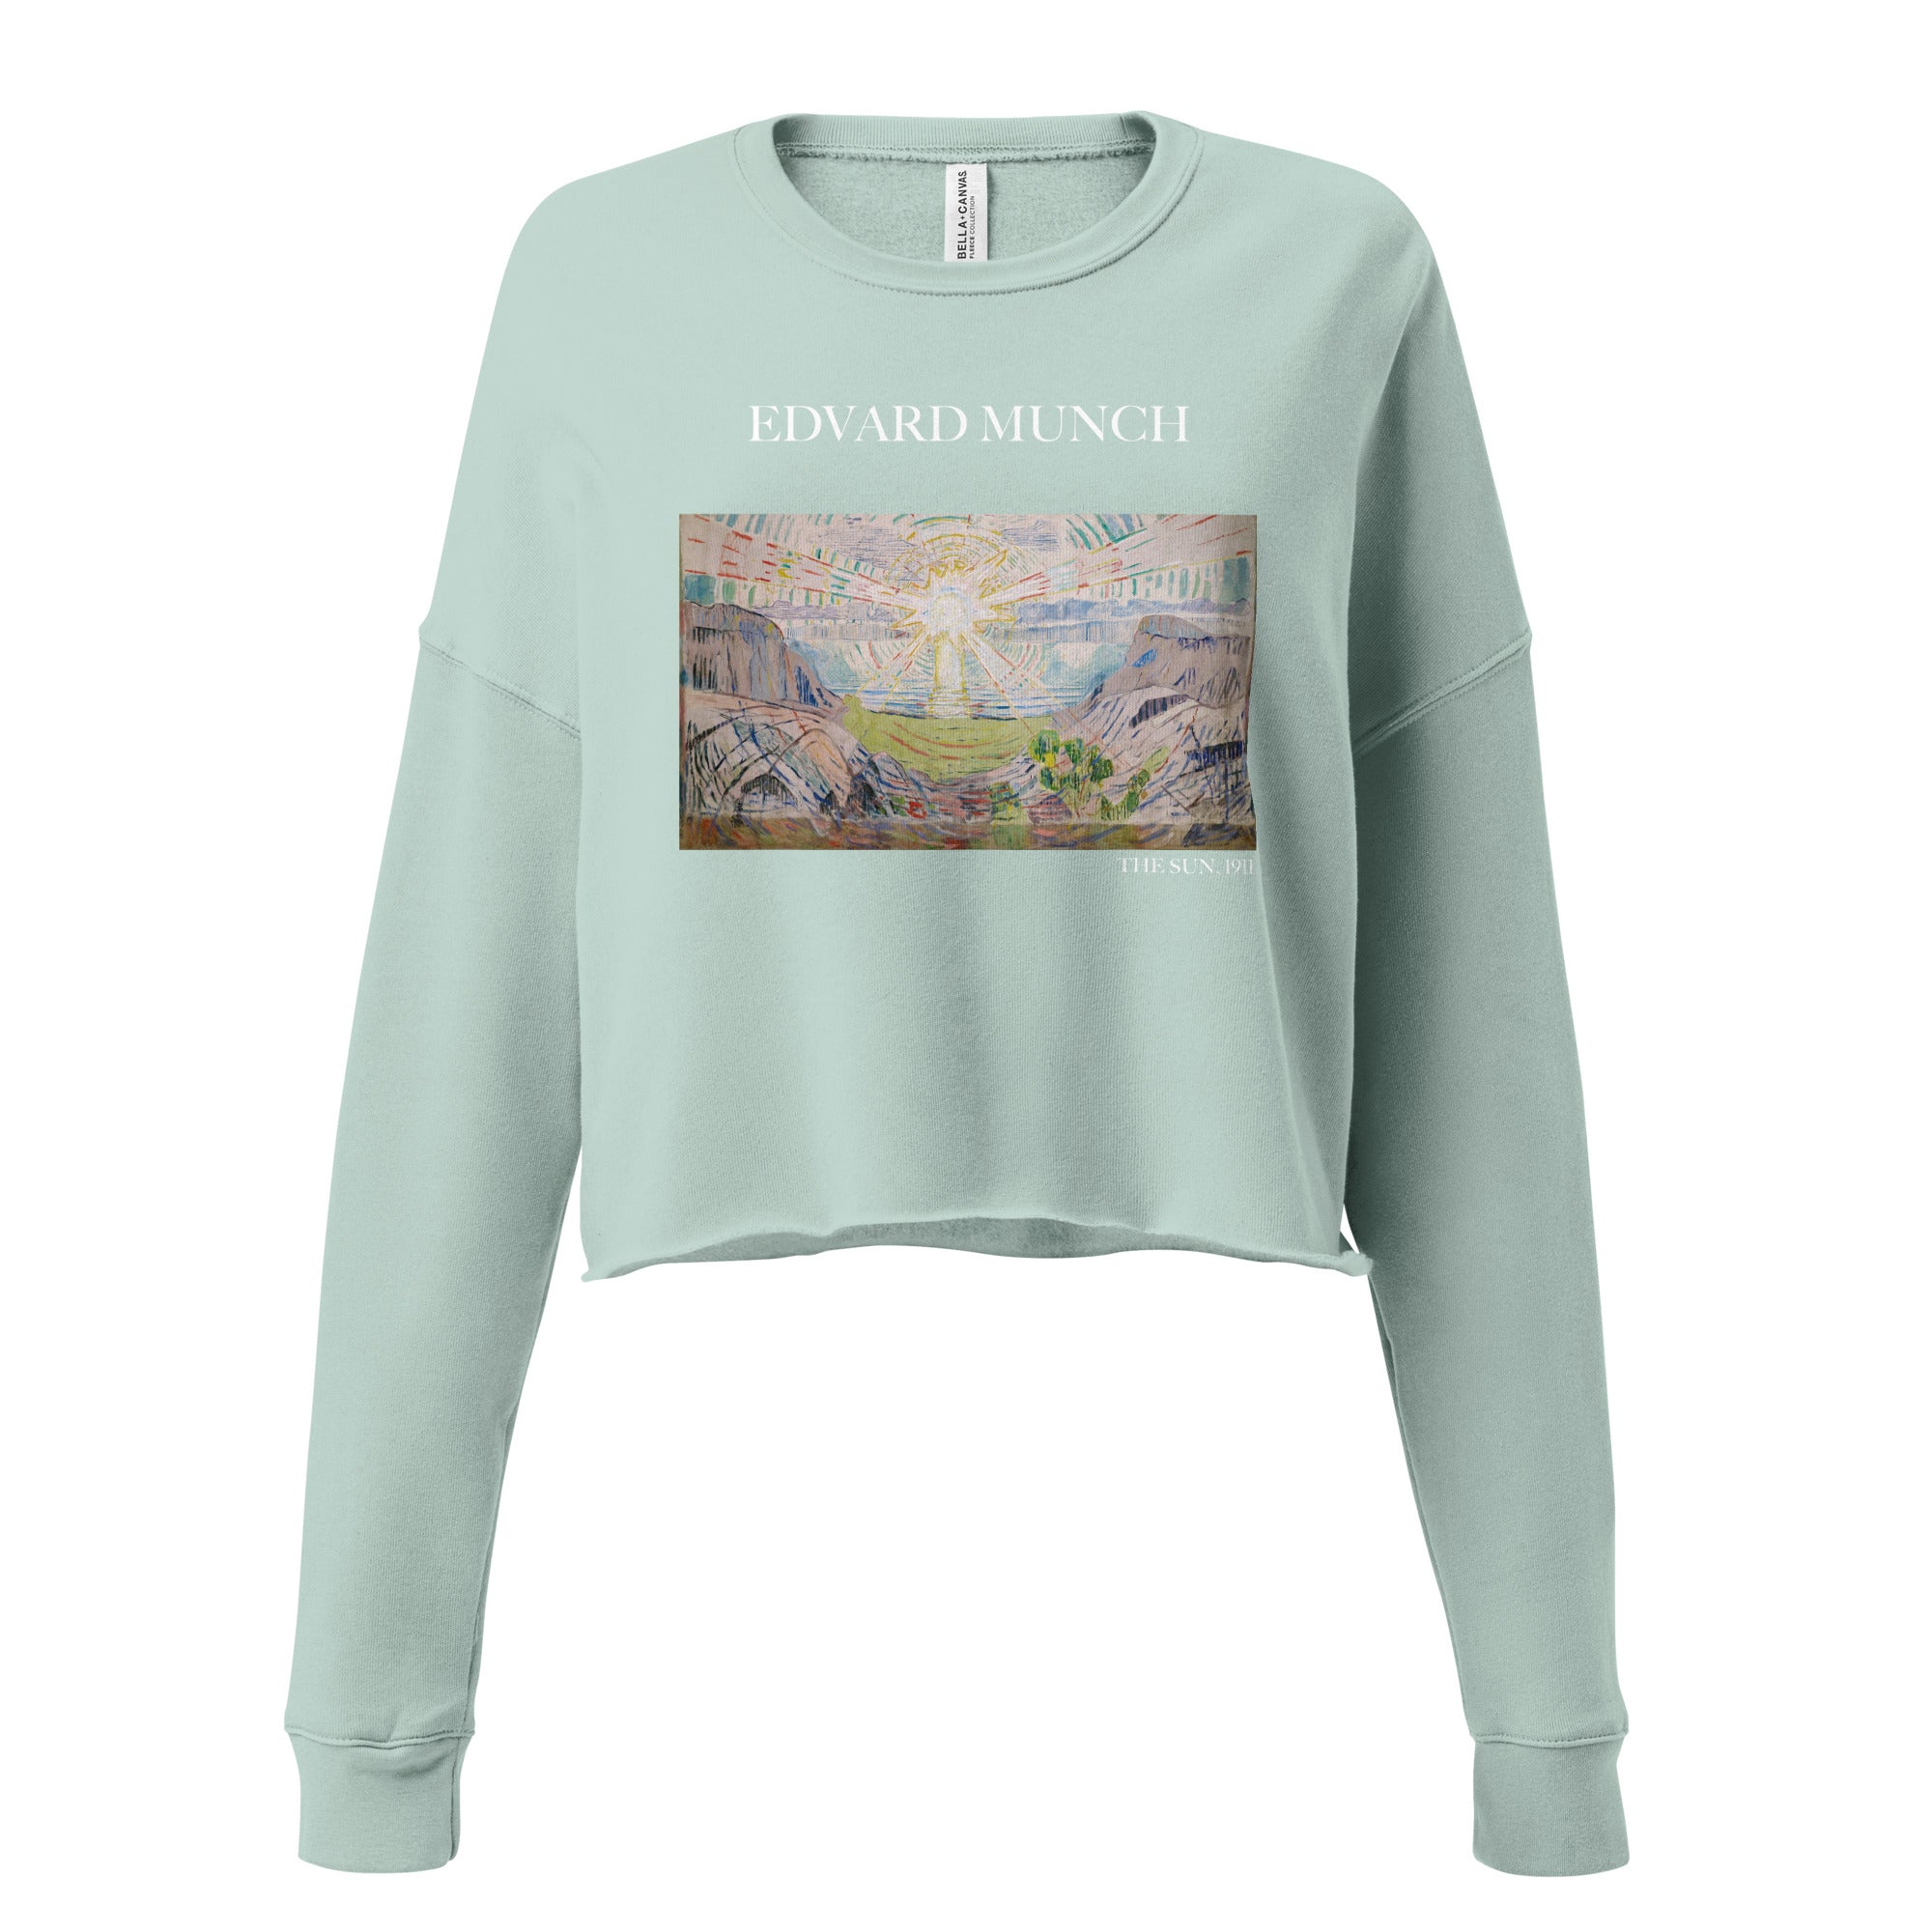 Edvard Munch 'The Sun' Famous Painting Cropped Sweatshirt | Premium Art Cropped Sweatshirt